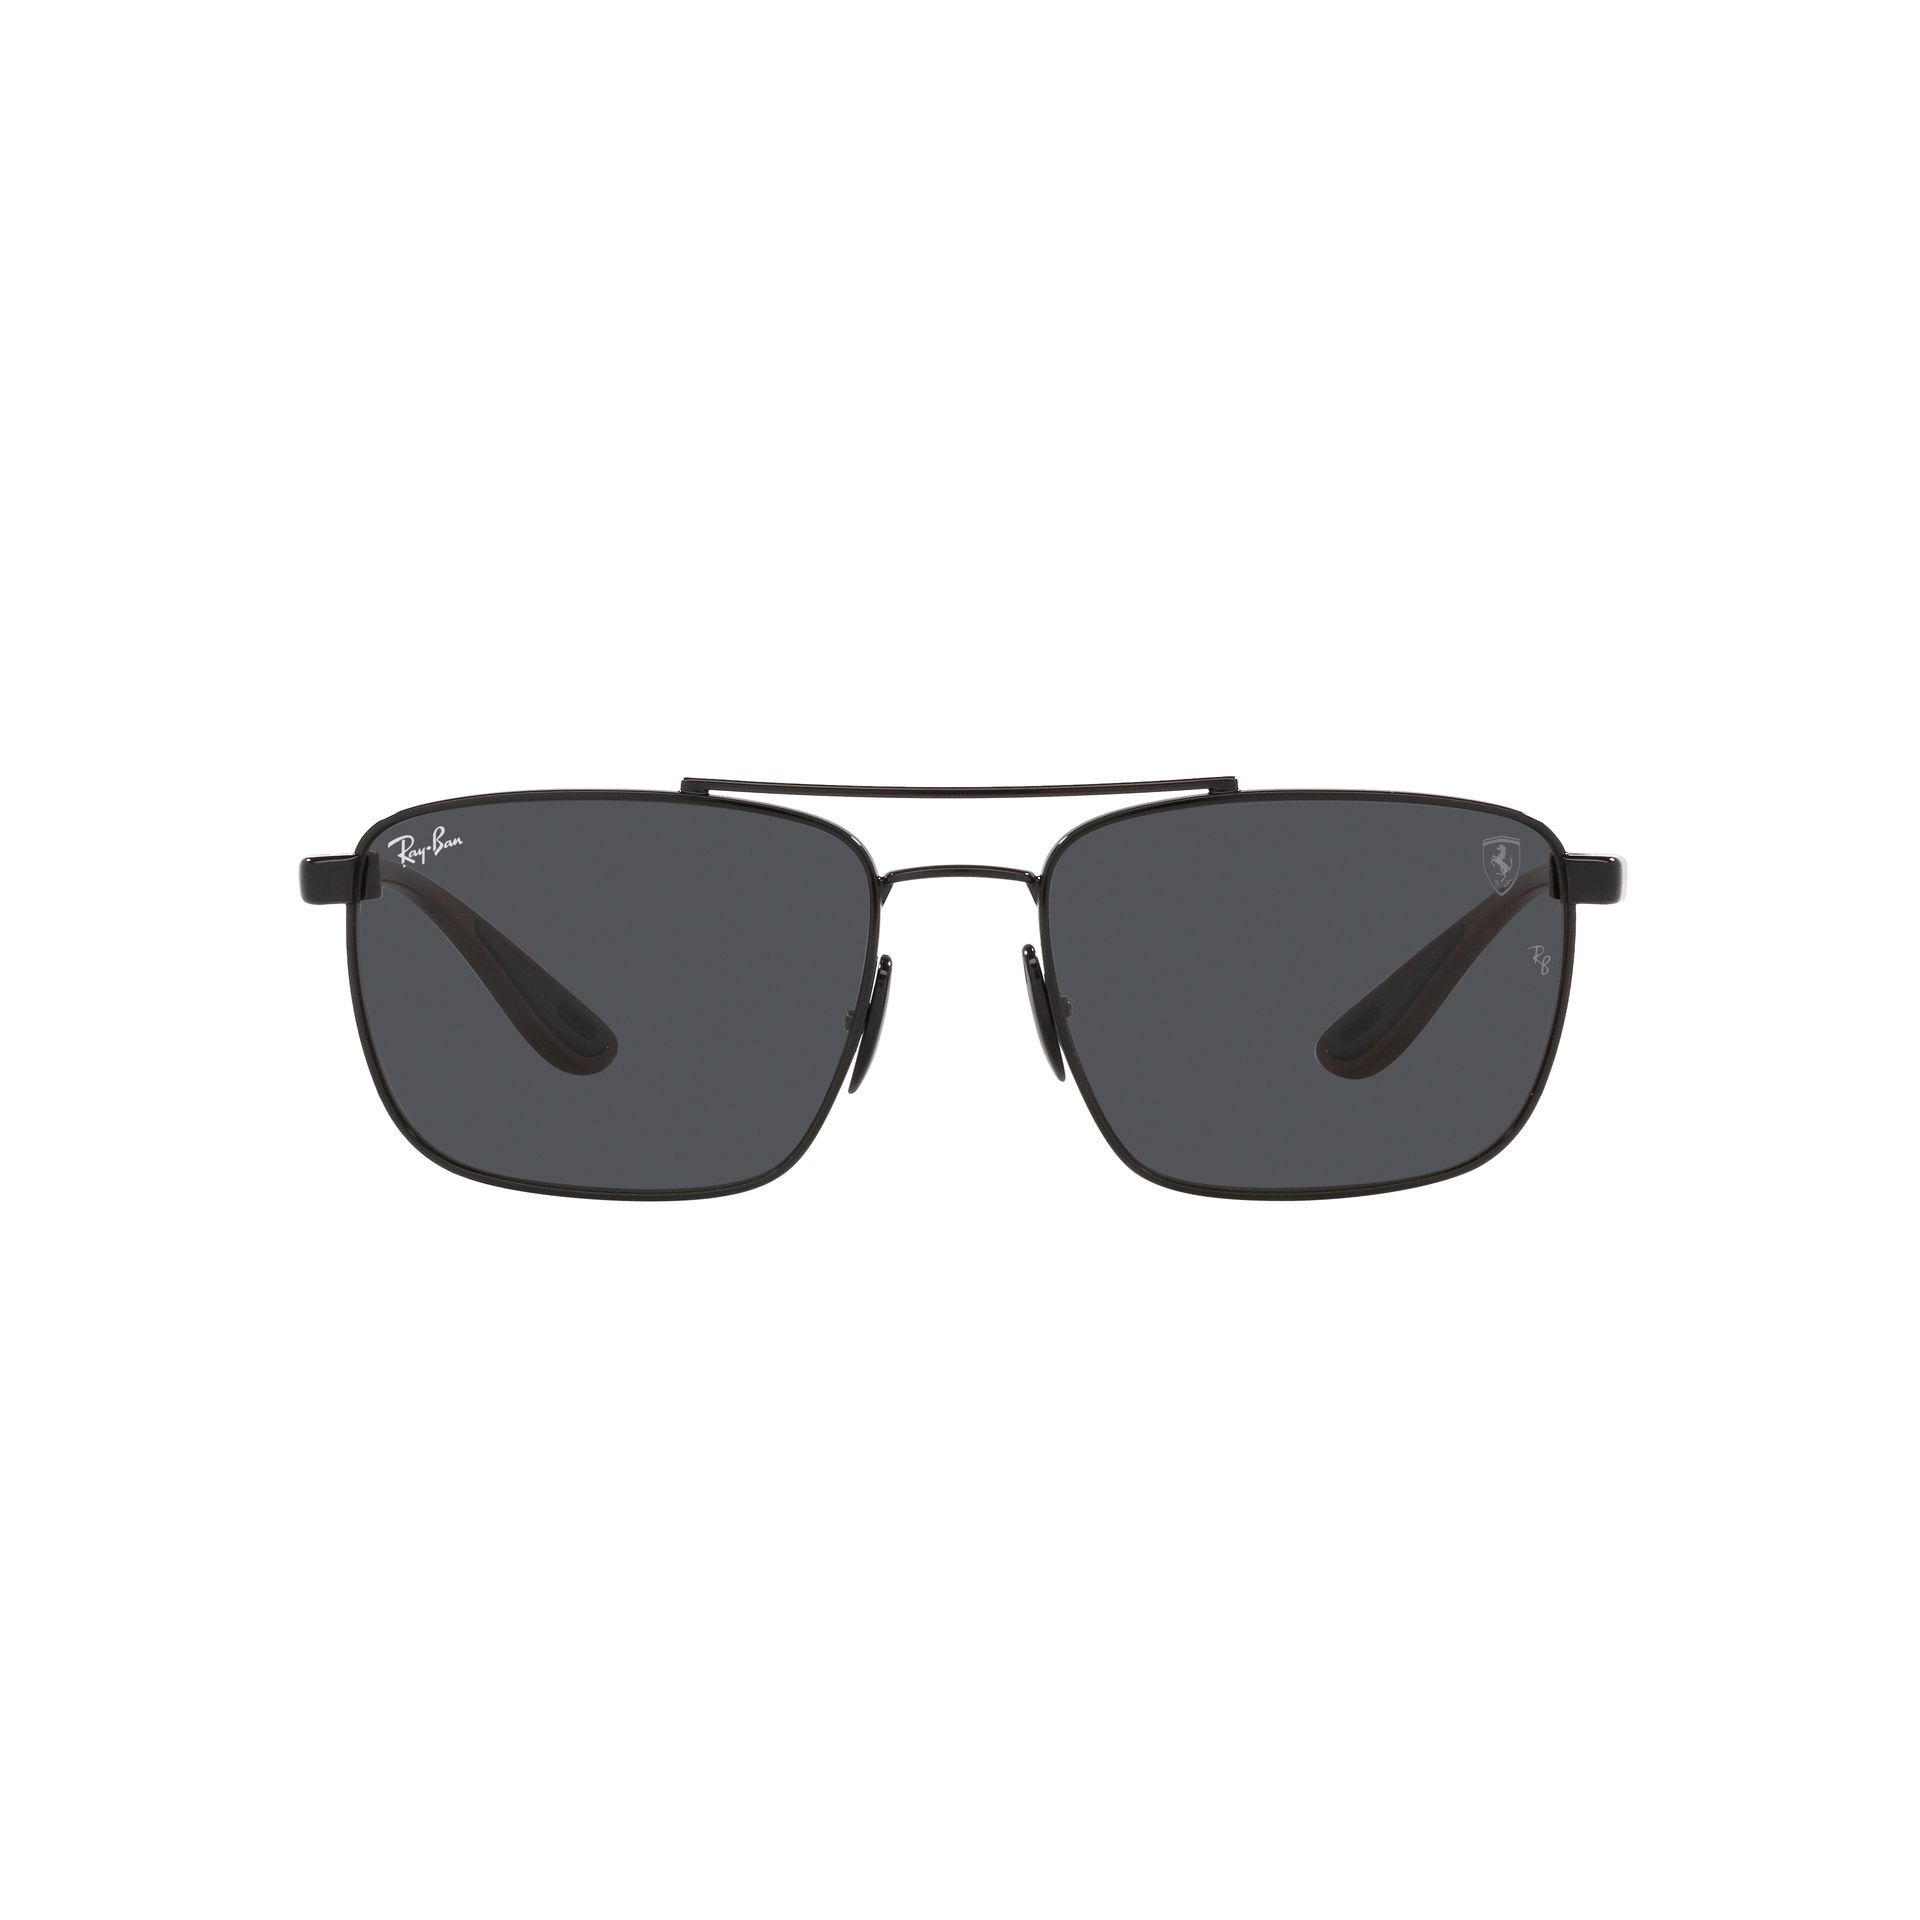 0RB3715M Square Sunglasses F02087 - size 58